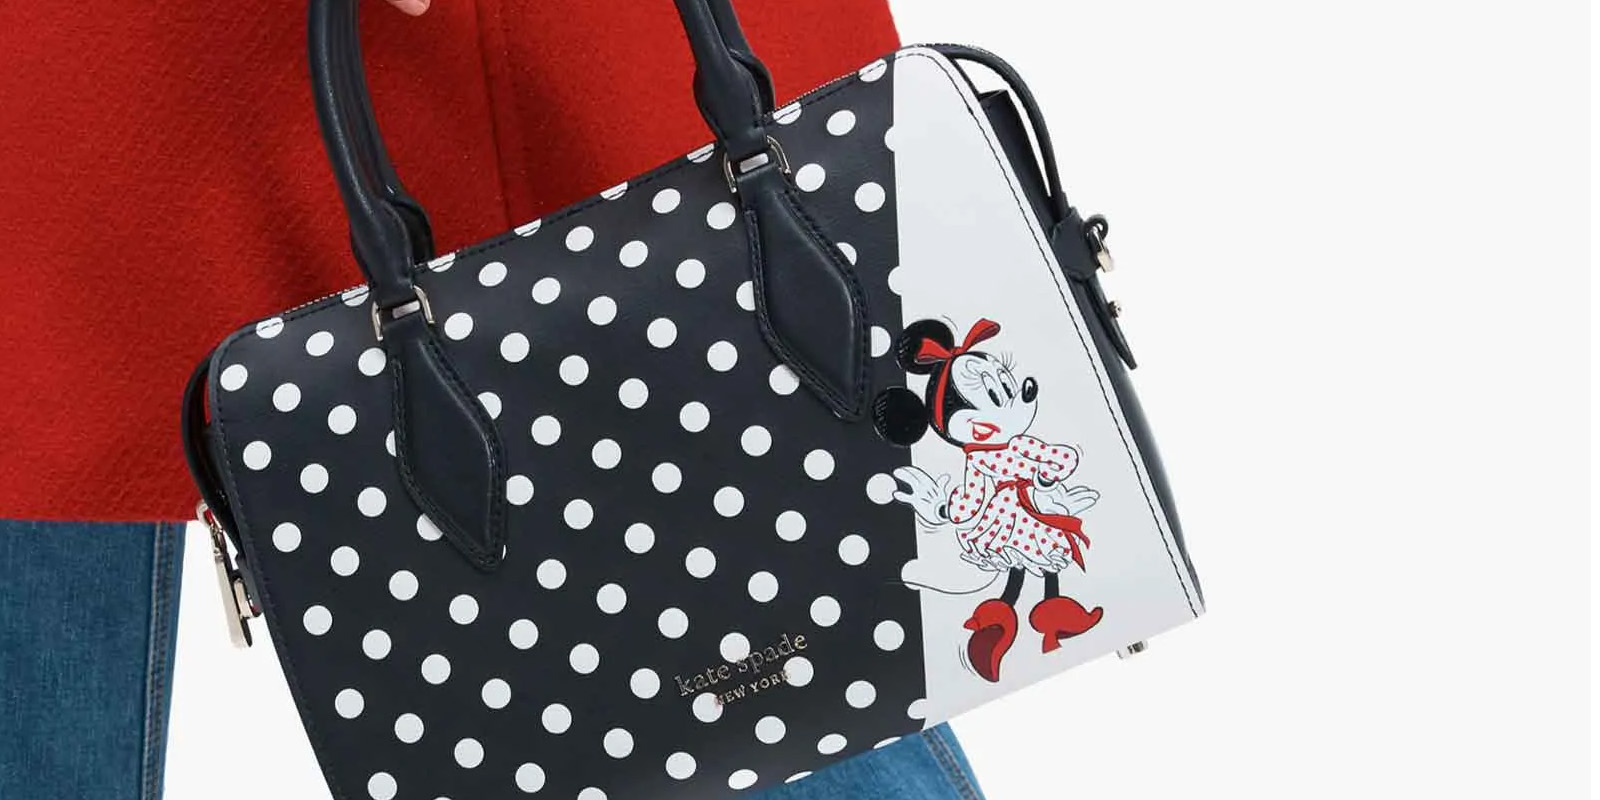 Disney X Kate Spade New York Minnie Mouse Tote Bag